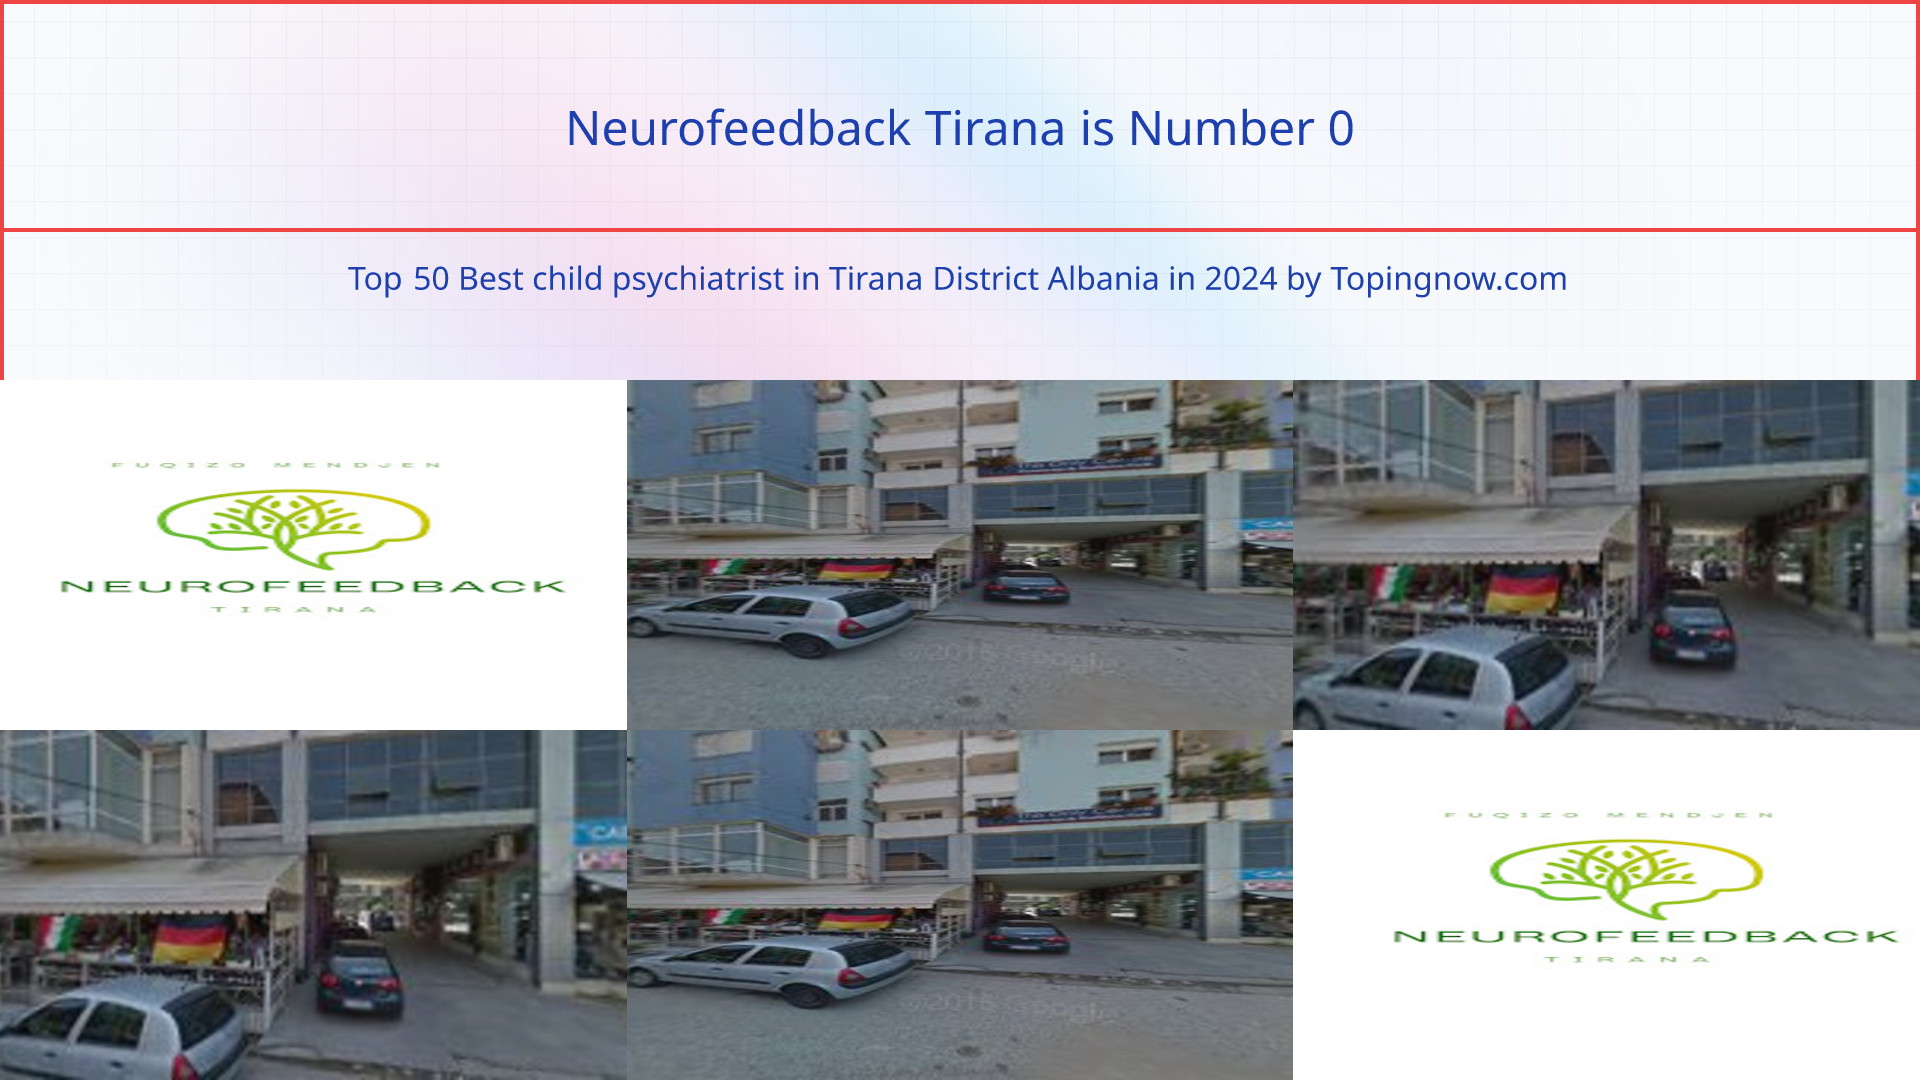 Neurofeedback Tirana: Top 50 Best child psychiatrist in Tirana District Albania in 2024